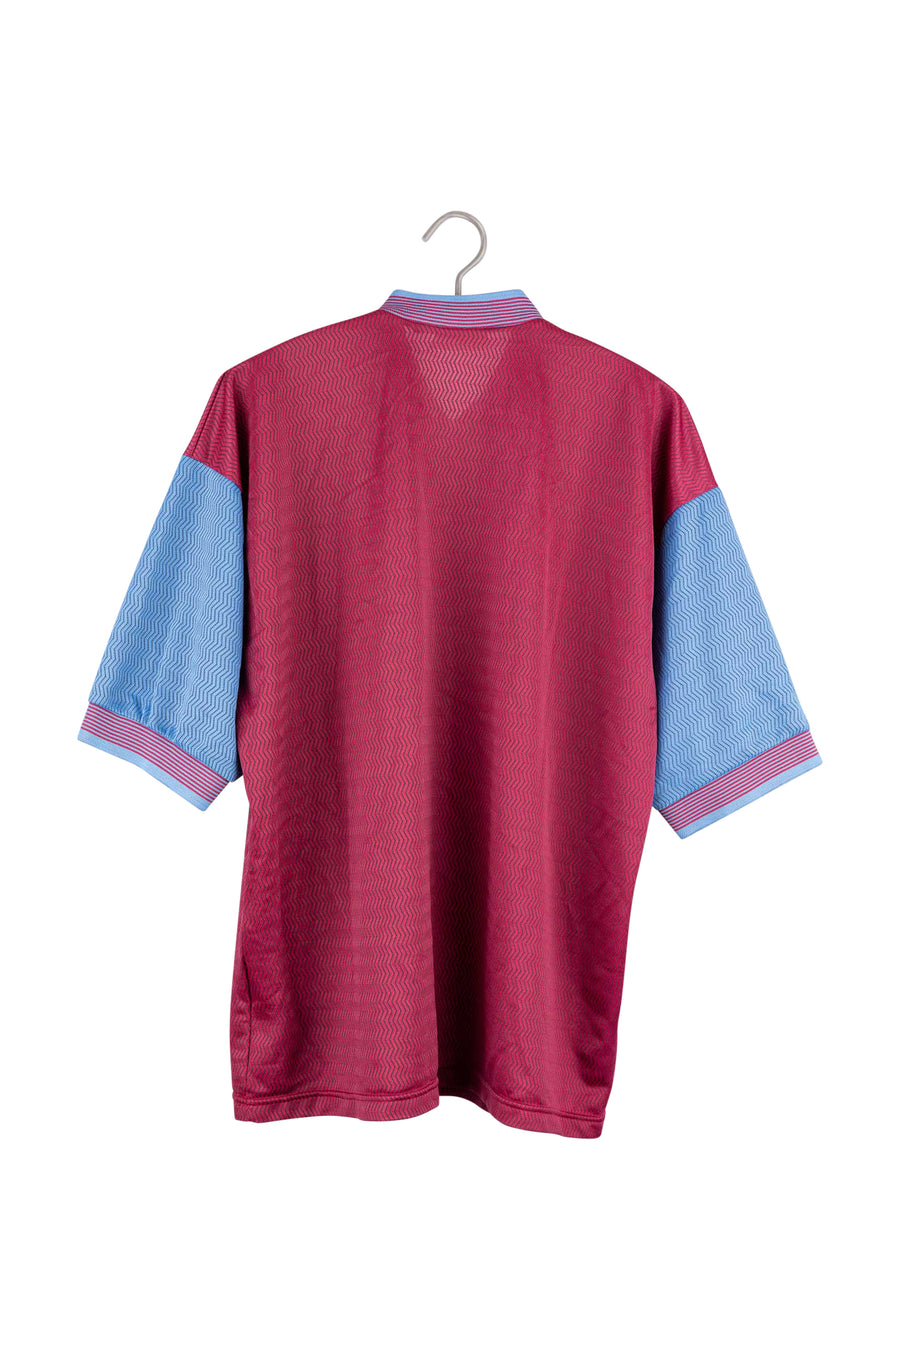 Aston Villa 1997 - 1998 Home Football Shirt